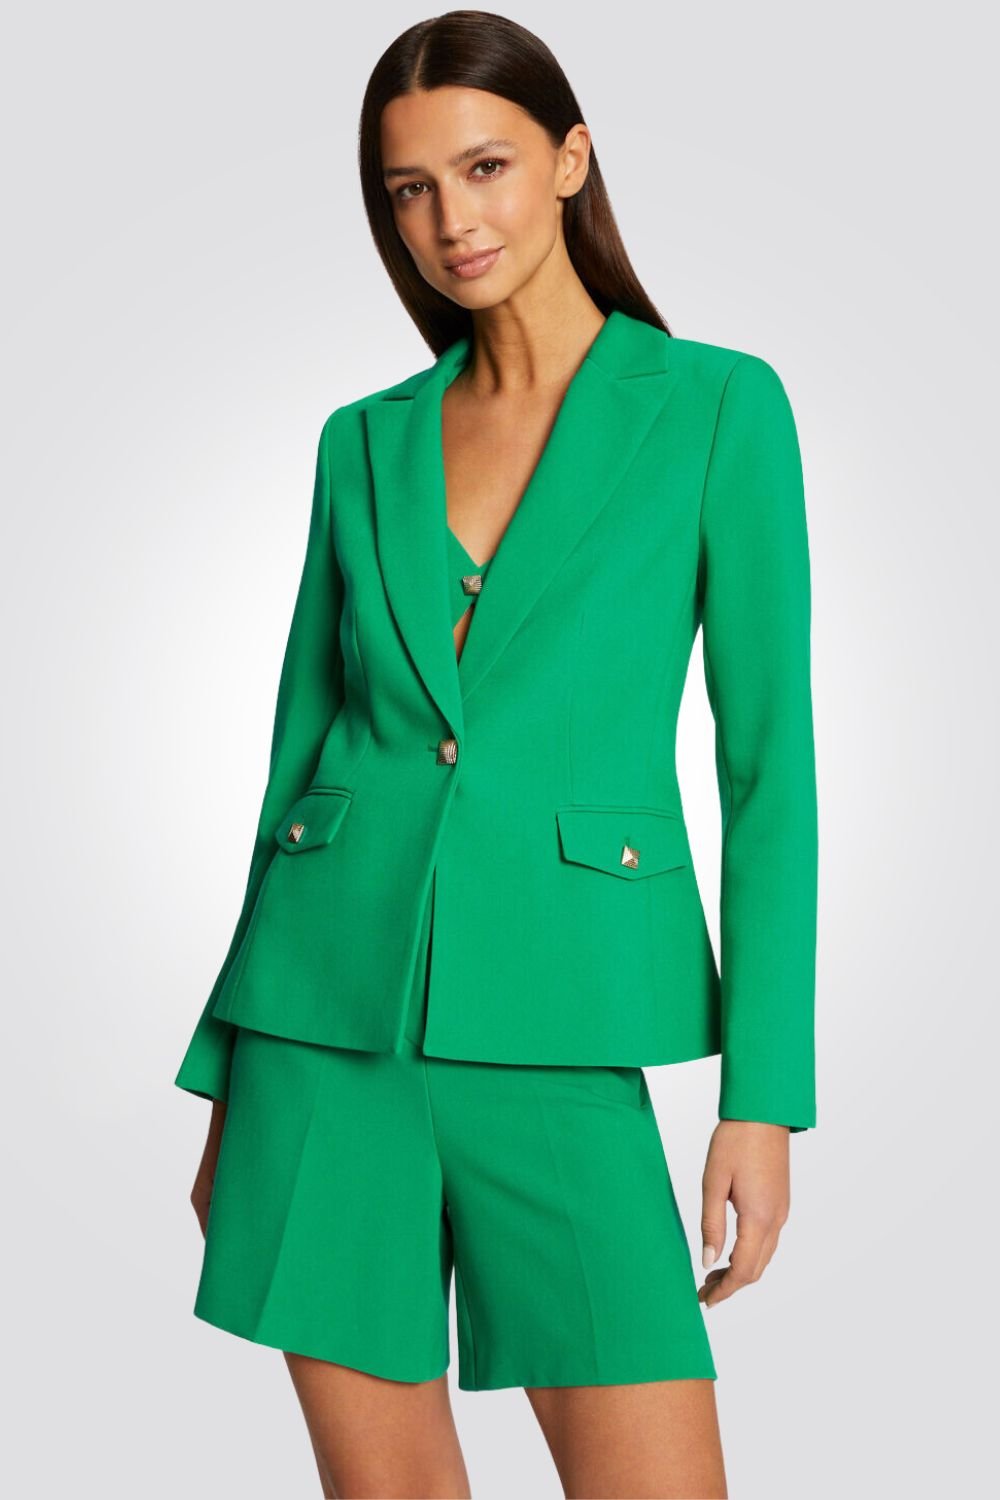 MORGAN - ג'קט לנשים בצבע ירוק - MASHBIR//365